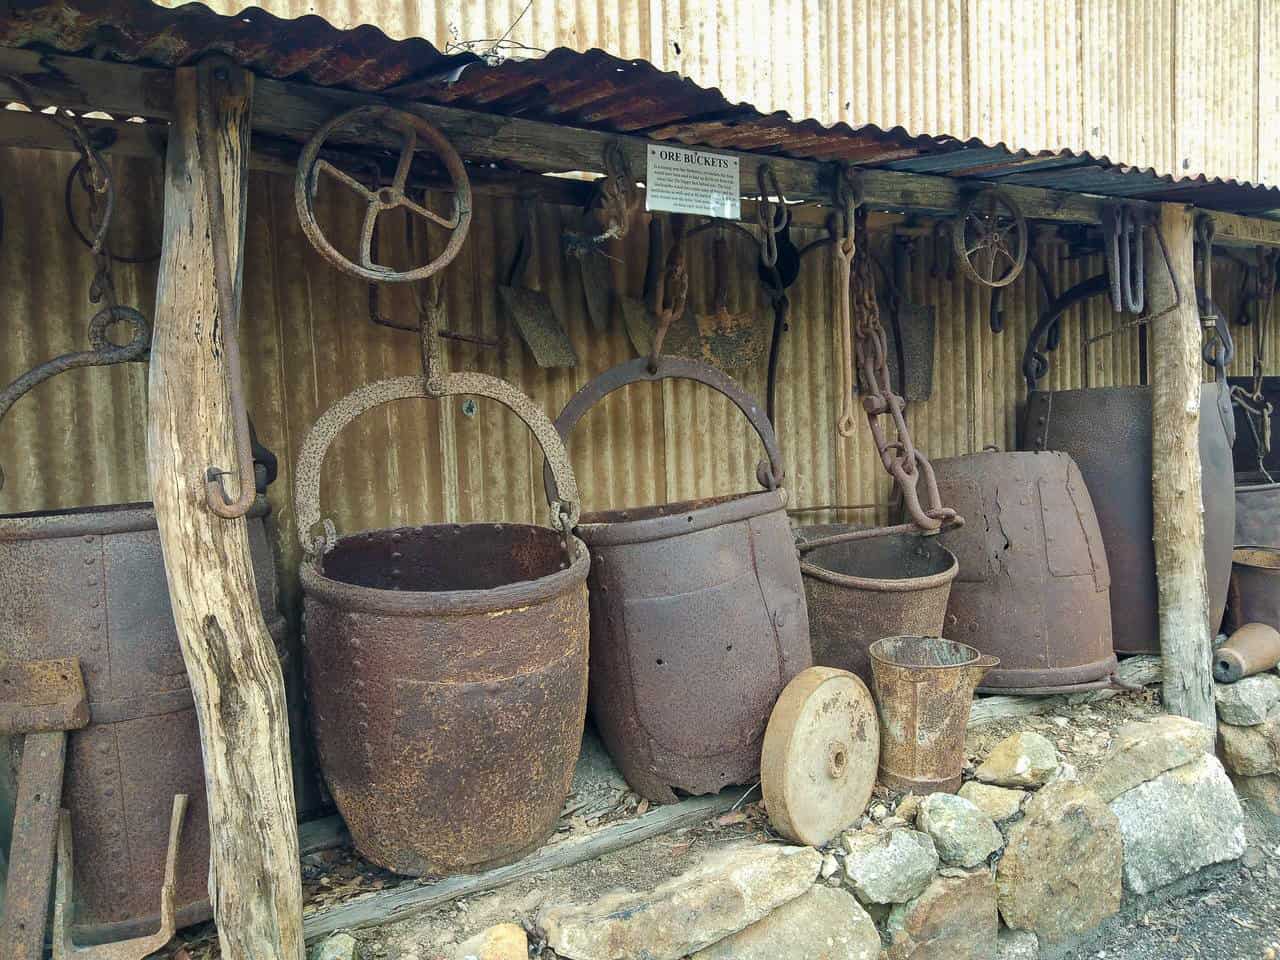 Ore buckets at Herberton Heritage Village museum, North Queensland // Travel Mermaid.com